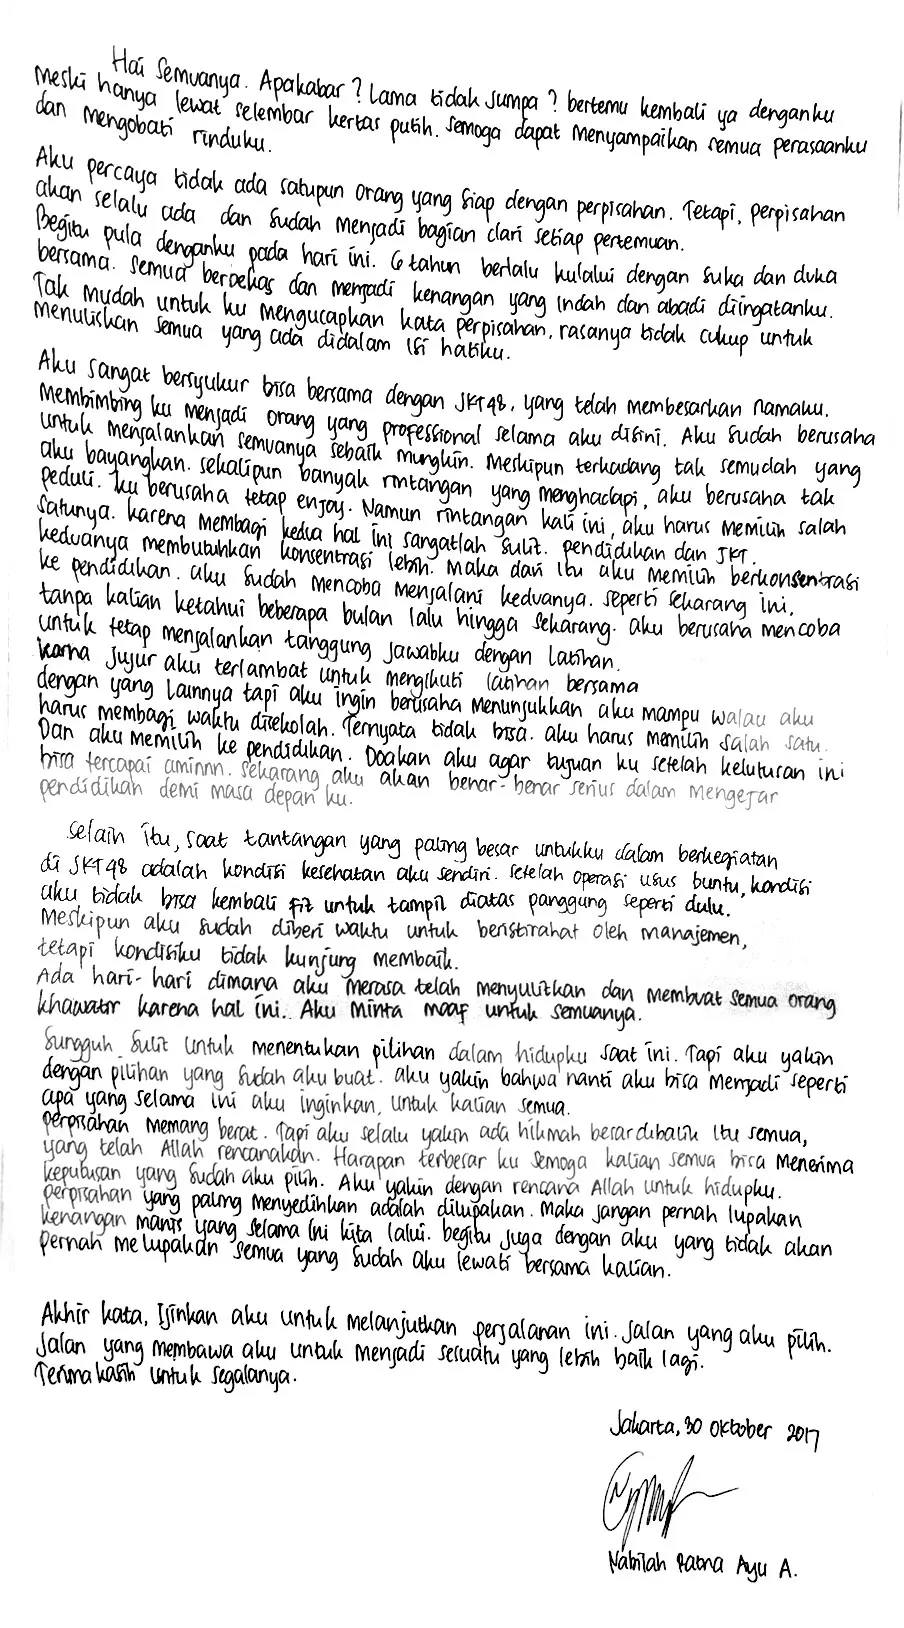 Surat dari Nabilah Ratna Ayu kepada fans saat mengumumkan keluar dari JKT48. (jkt48.com)